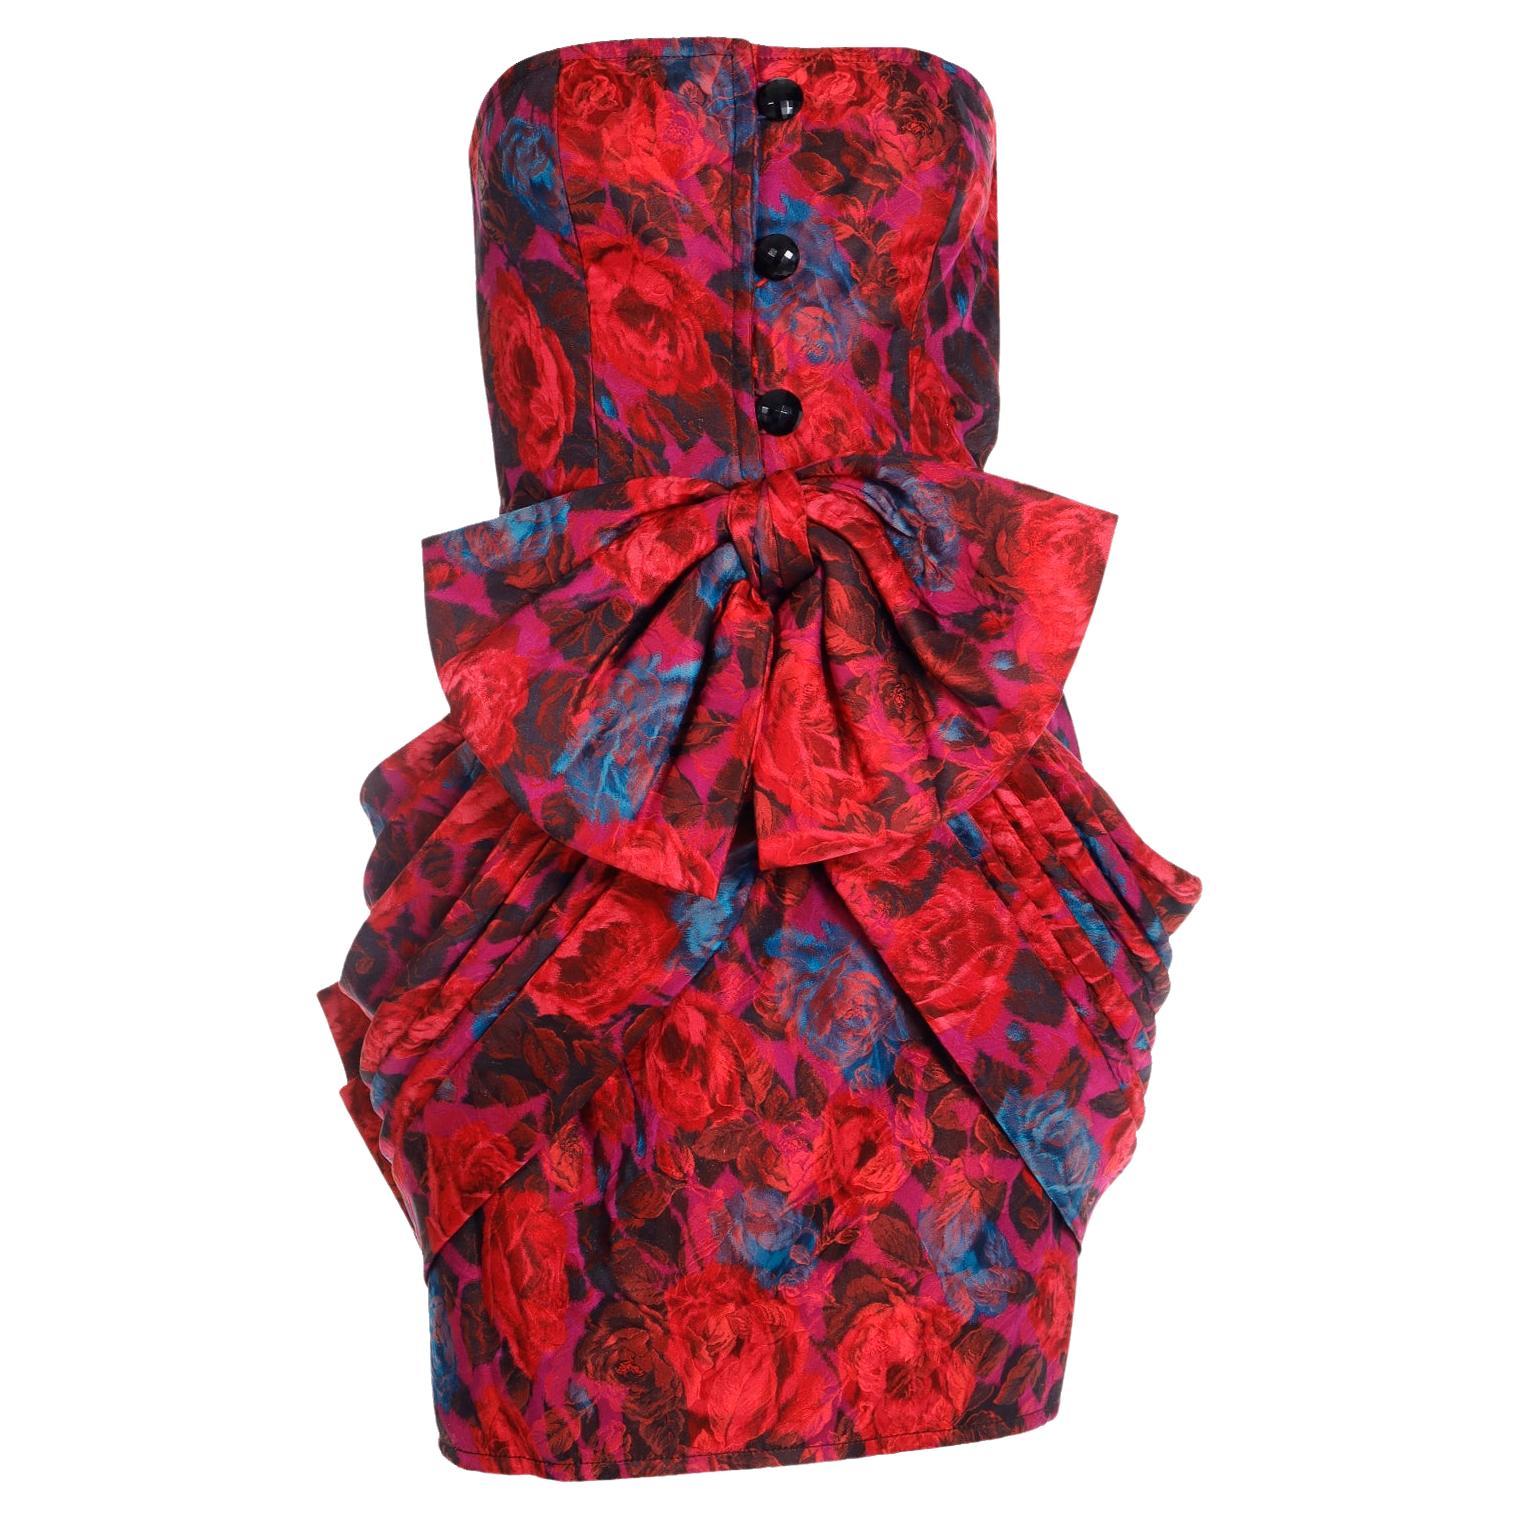 Odicini Couture Vintage Buntes trägerloses Vintage-Minikleid mit Blumenmuster in Rot, Lila & Blau im Angebot